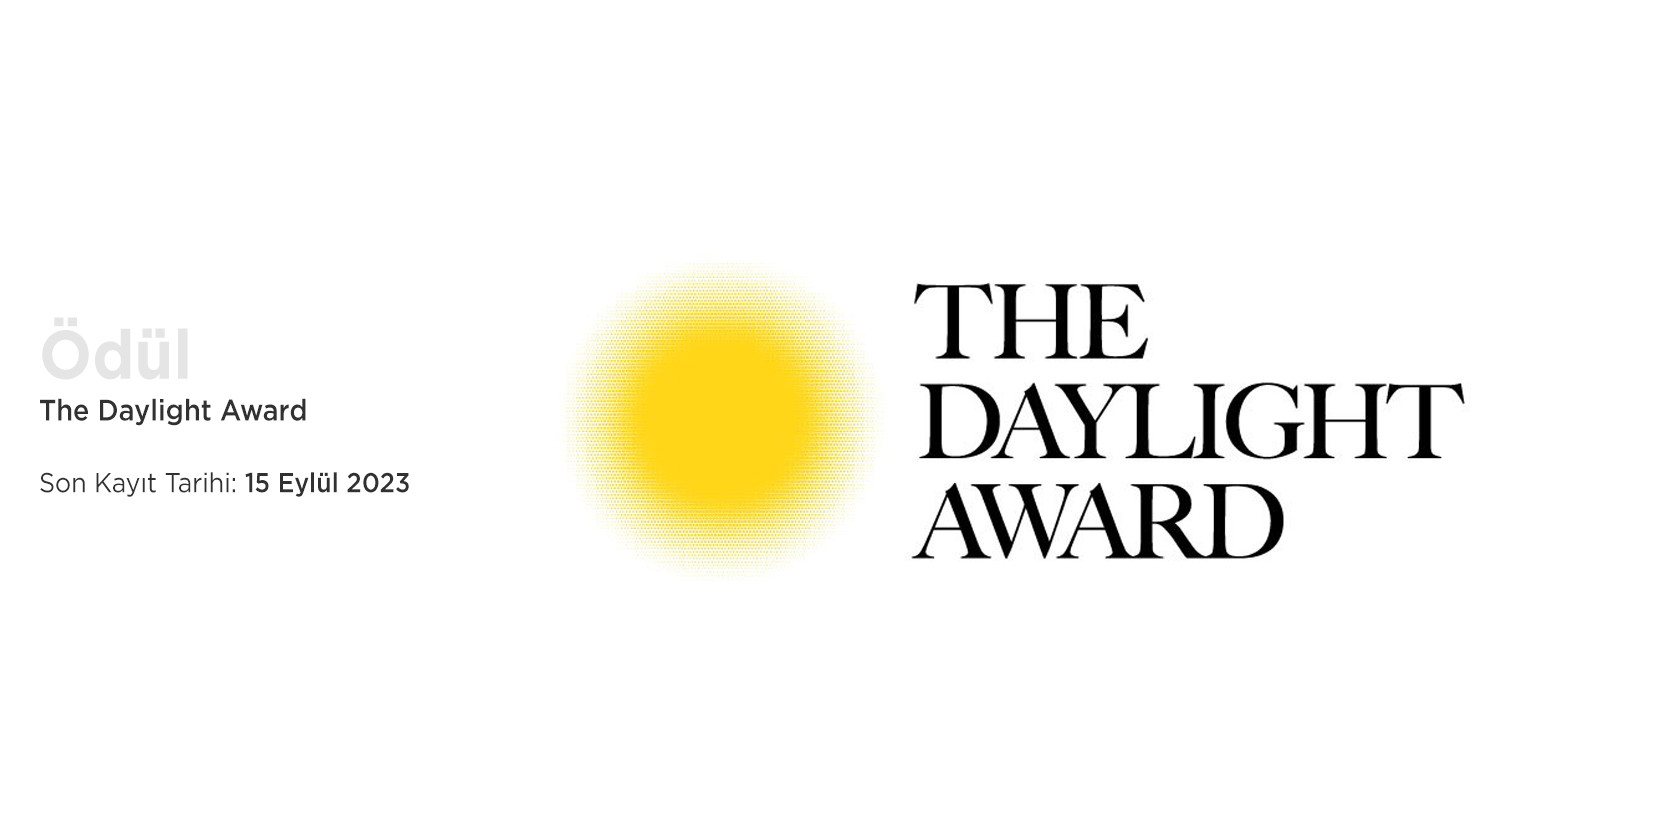 The Daylight Award